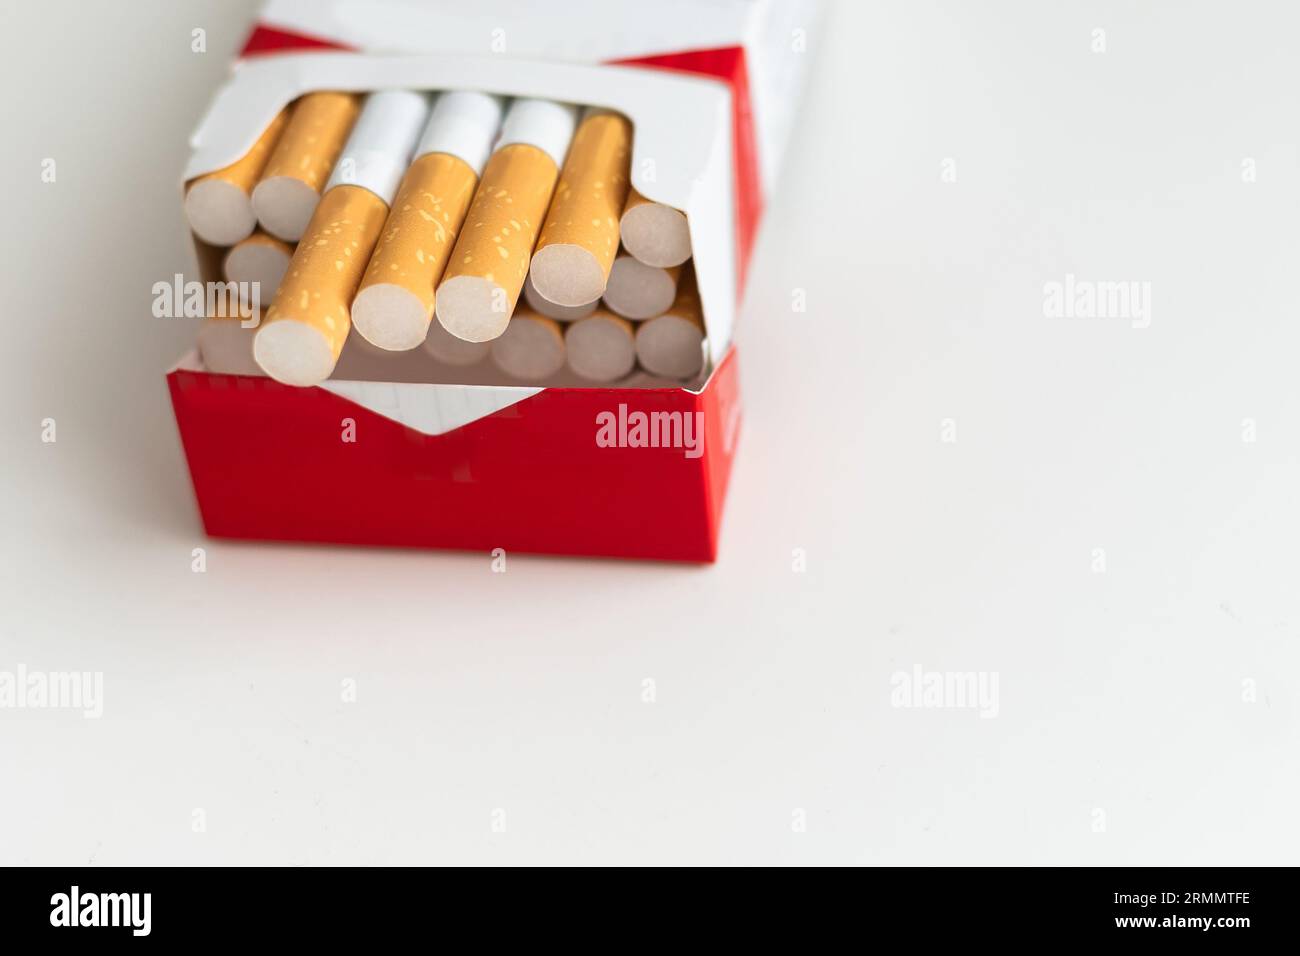 Marlboro Zigaretten Red Box - Volg online Shop